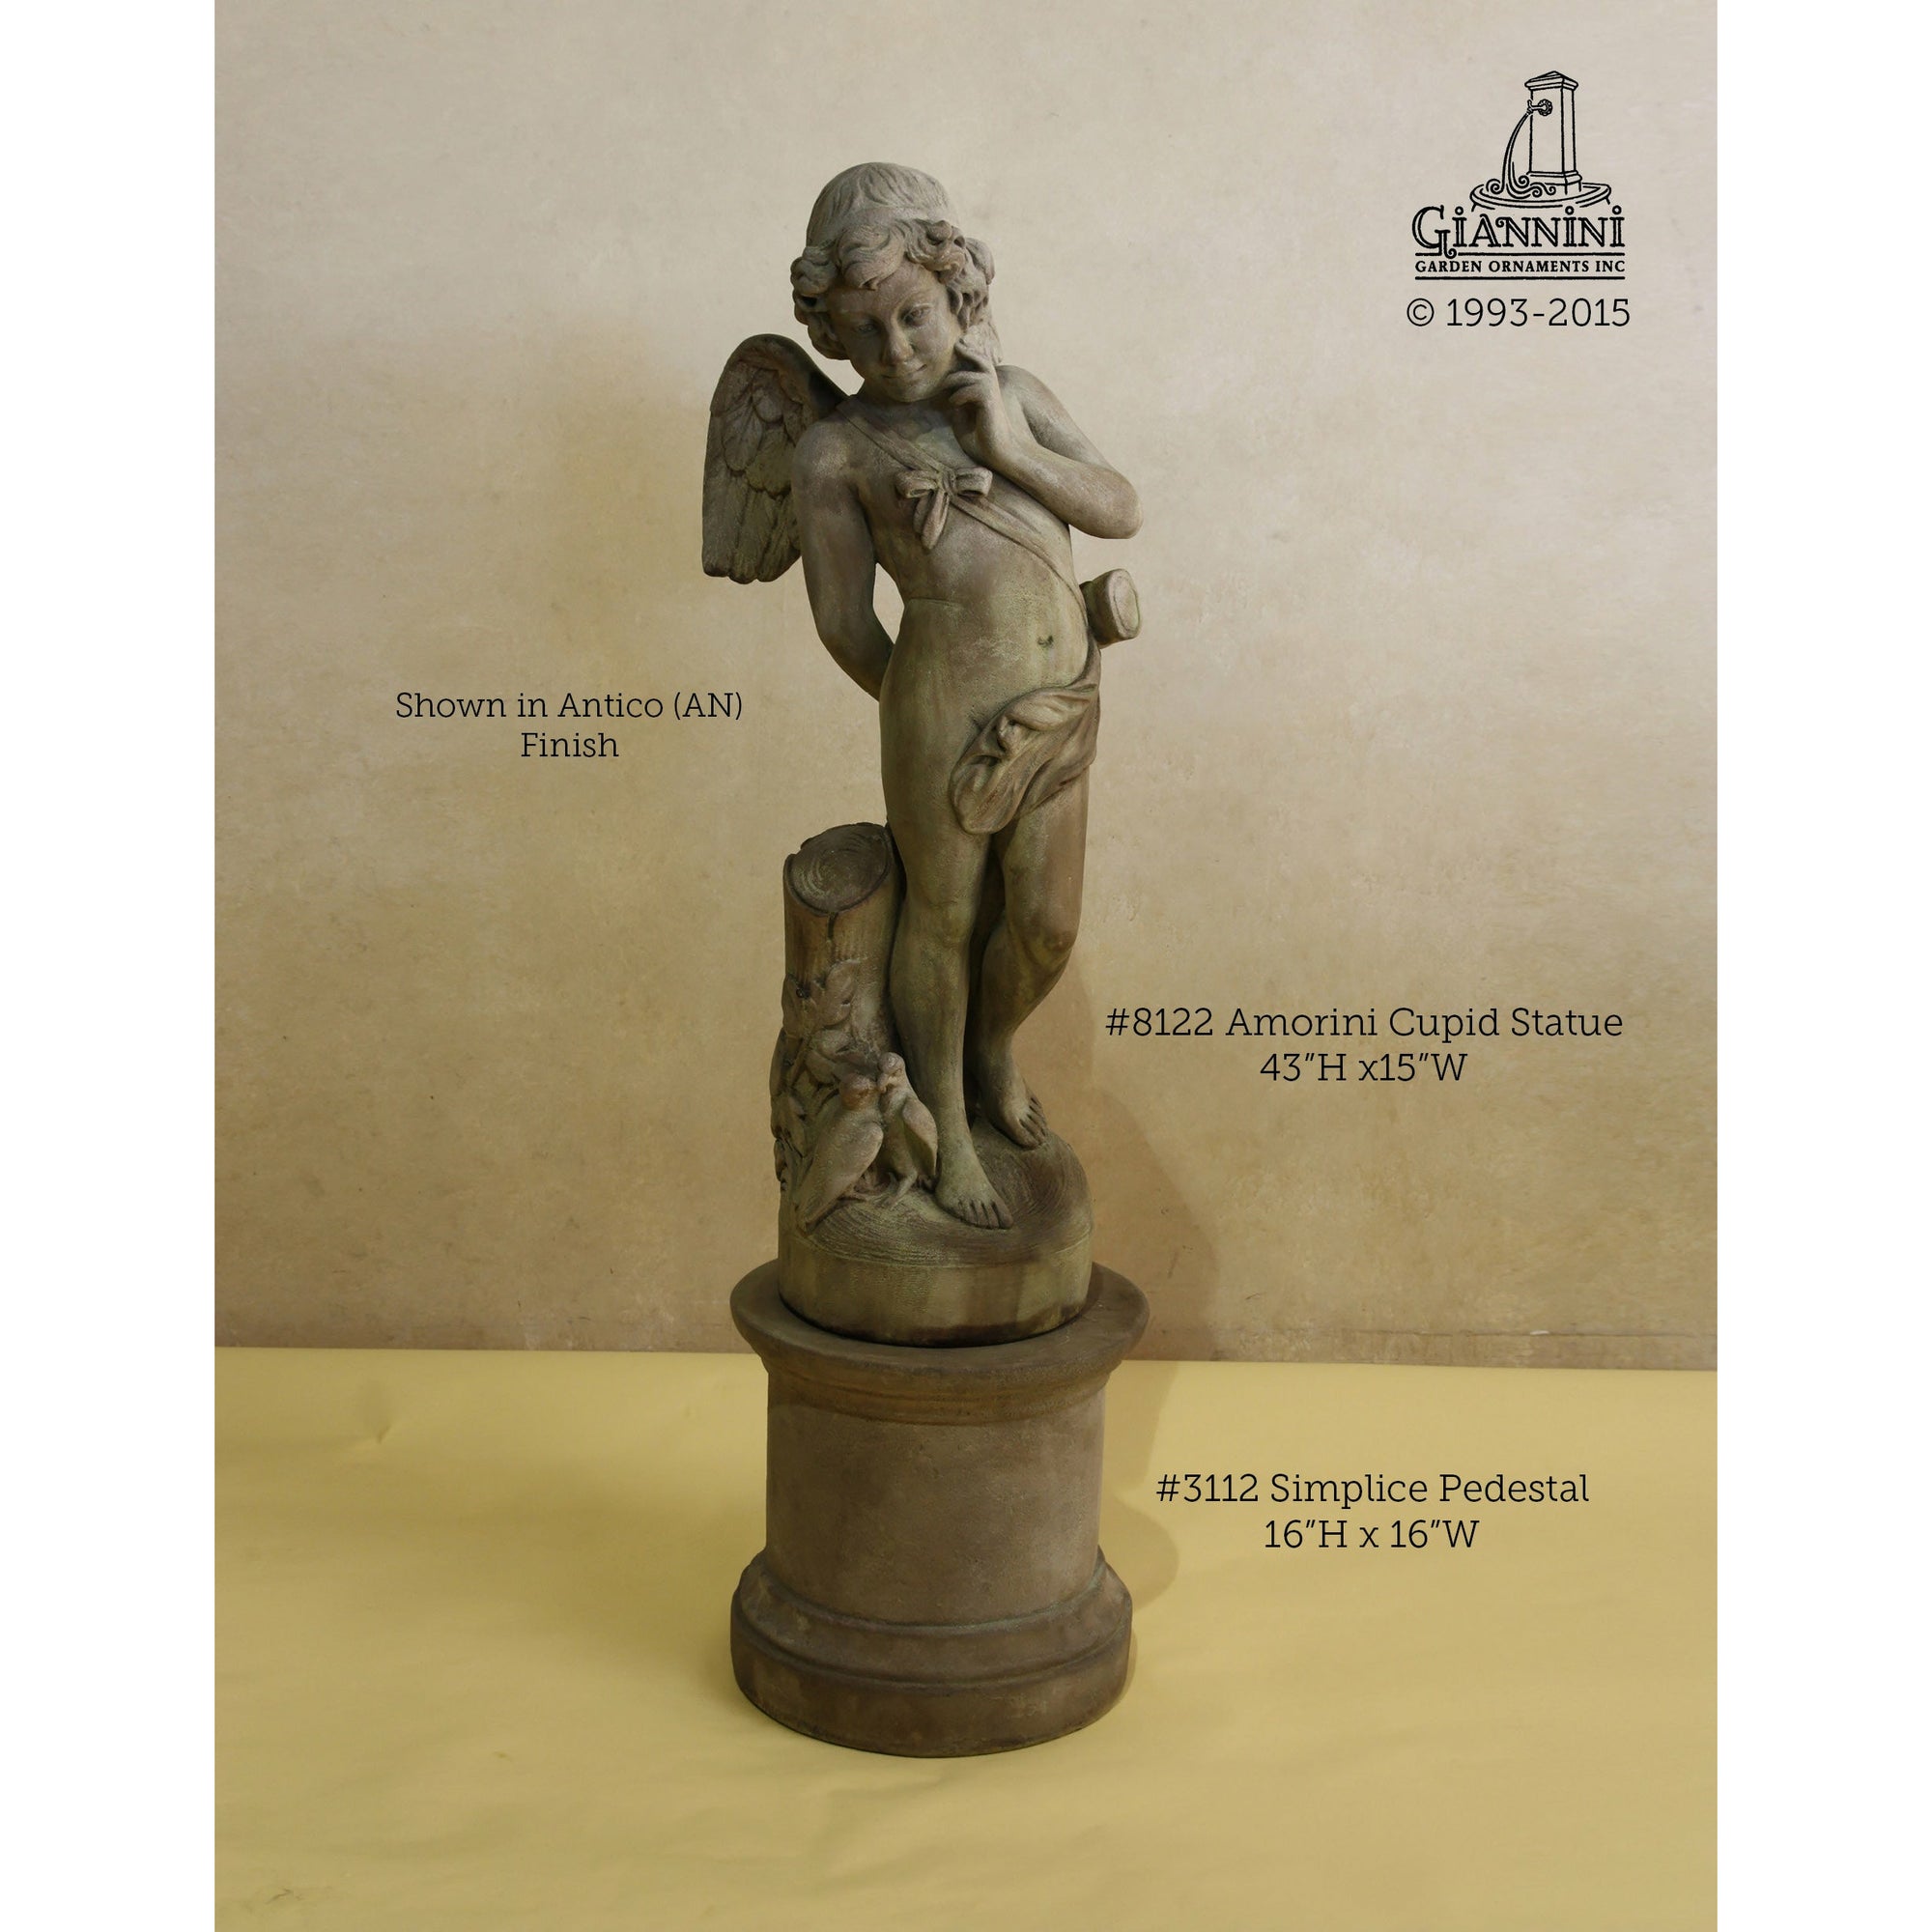 Giannini Garden Amorini Cupid Statue 8122 - With Simplice Pedestal - 3112 - Majestic Fountains